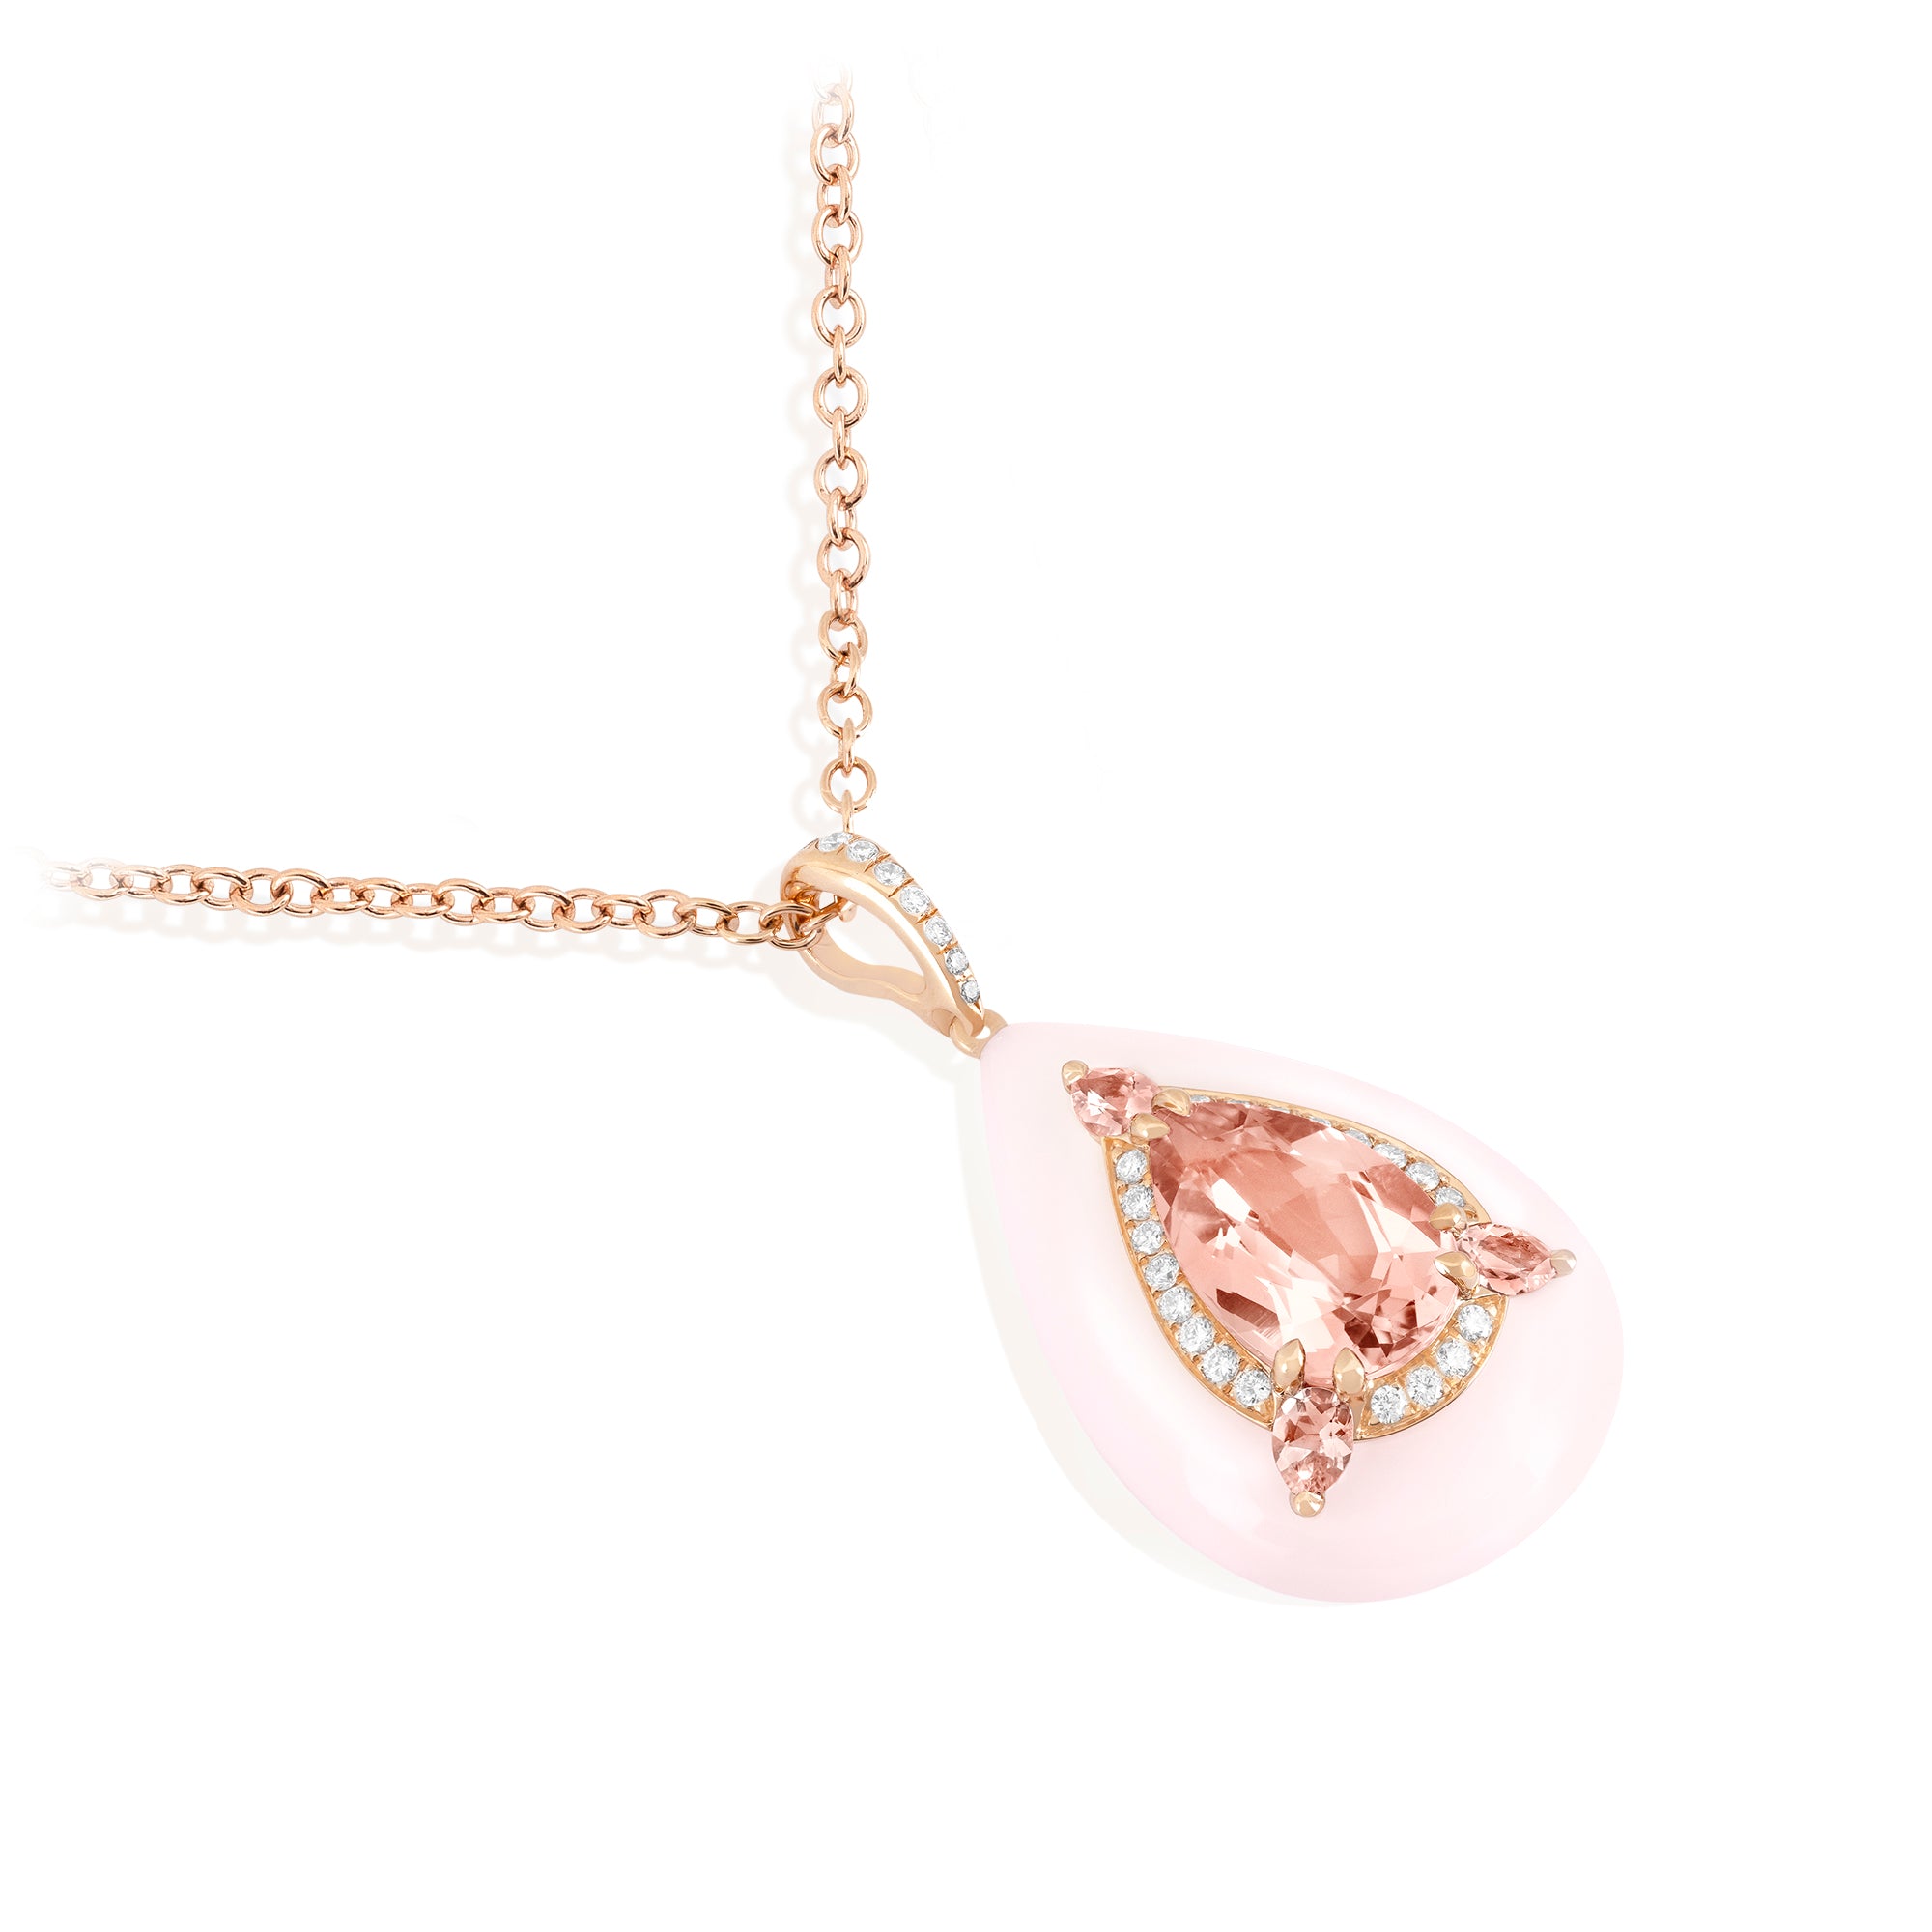 Reveal - Morganite and Pink Opal Pendant